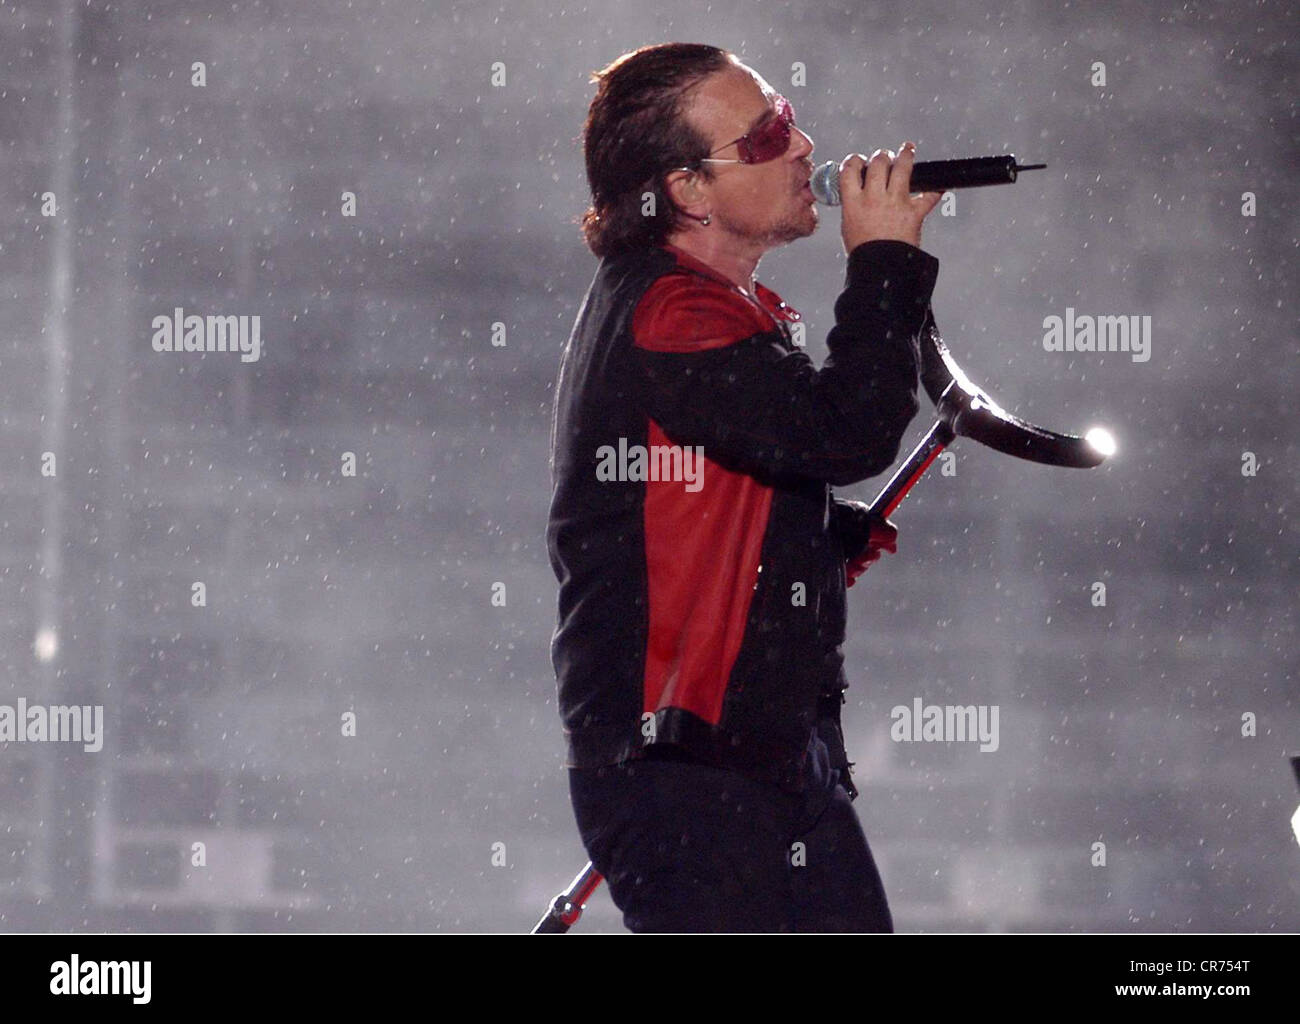 U2, Irish rock band, frontman Bono Vox is singing in the rain, half length, Olympic stadium, Munich, Germany, 2.8.2005, Stock Photo